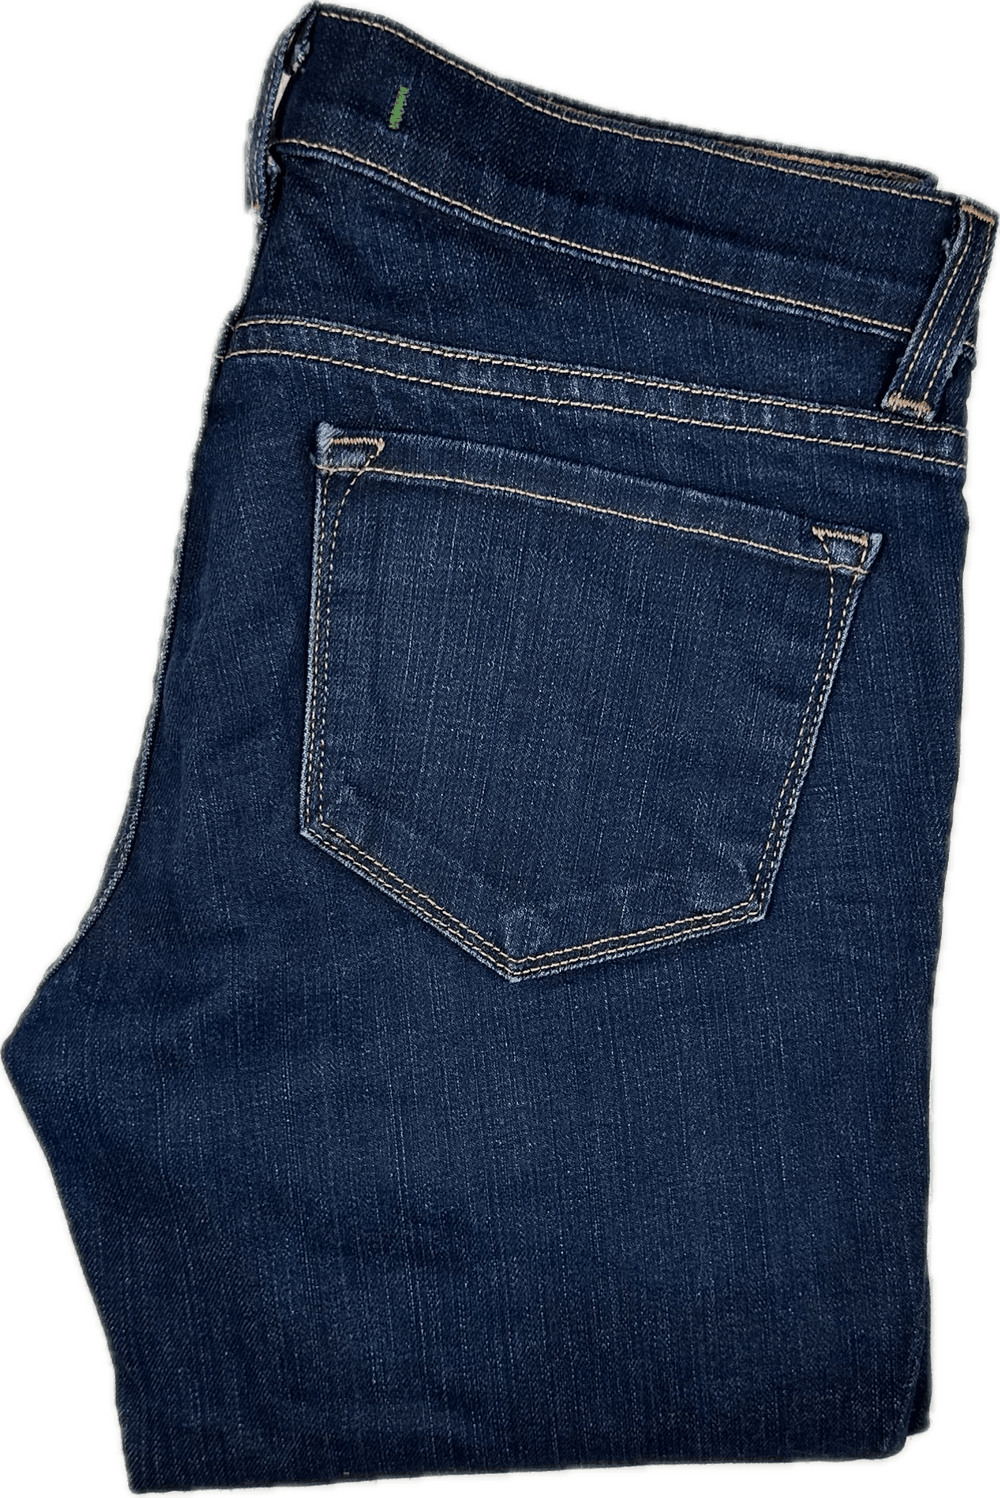 J Brand 'Skinny Leg' Low Rise Jeans in Dark Ink Wash- Size 26 - Jean Pool